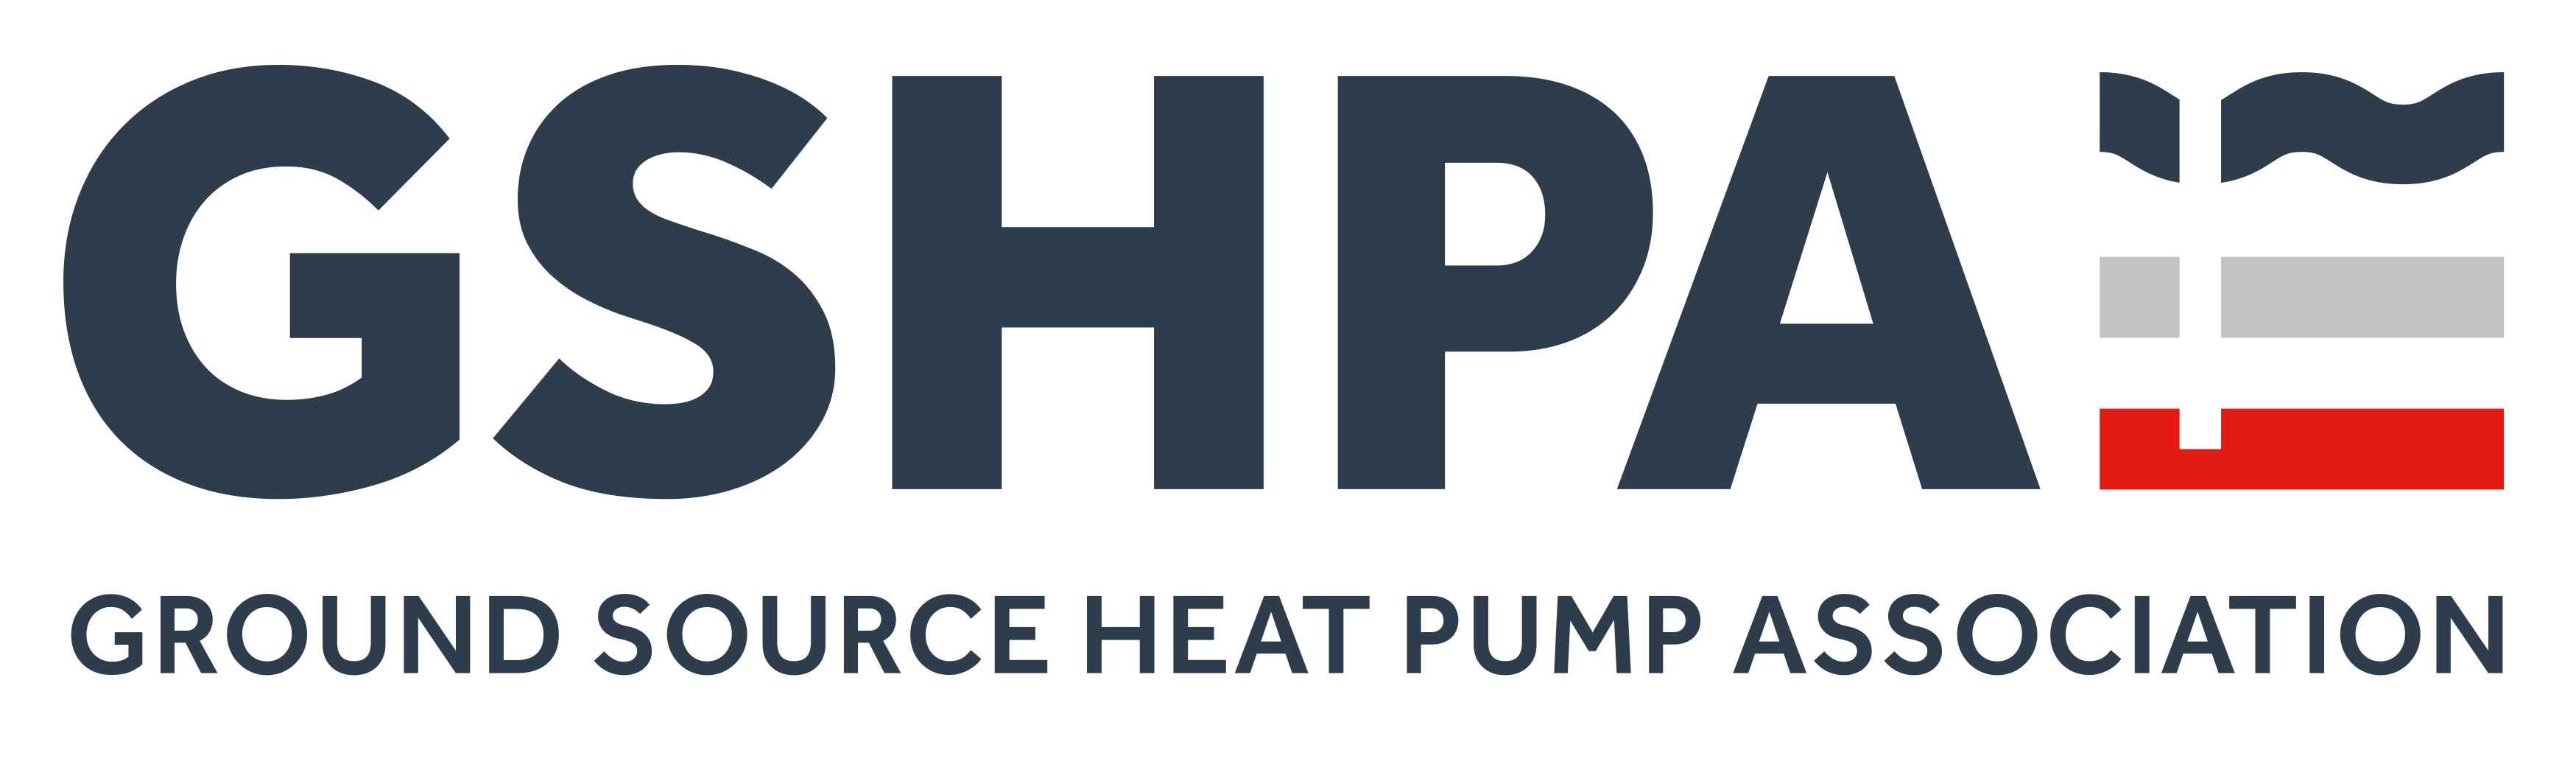 Ground Source Heat Pump Association logo